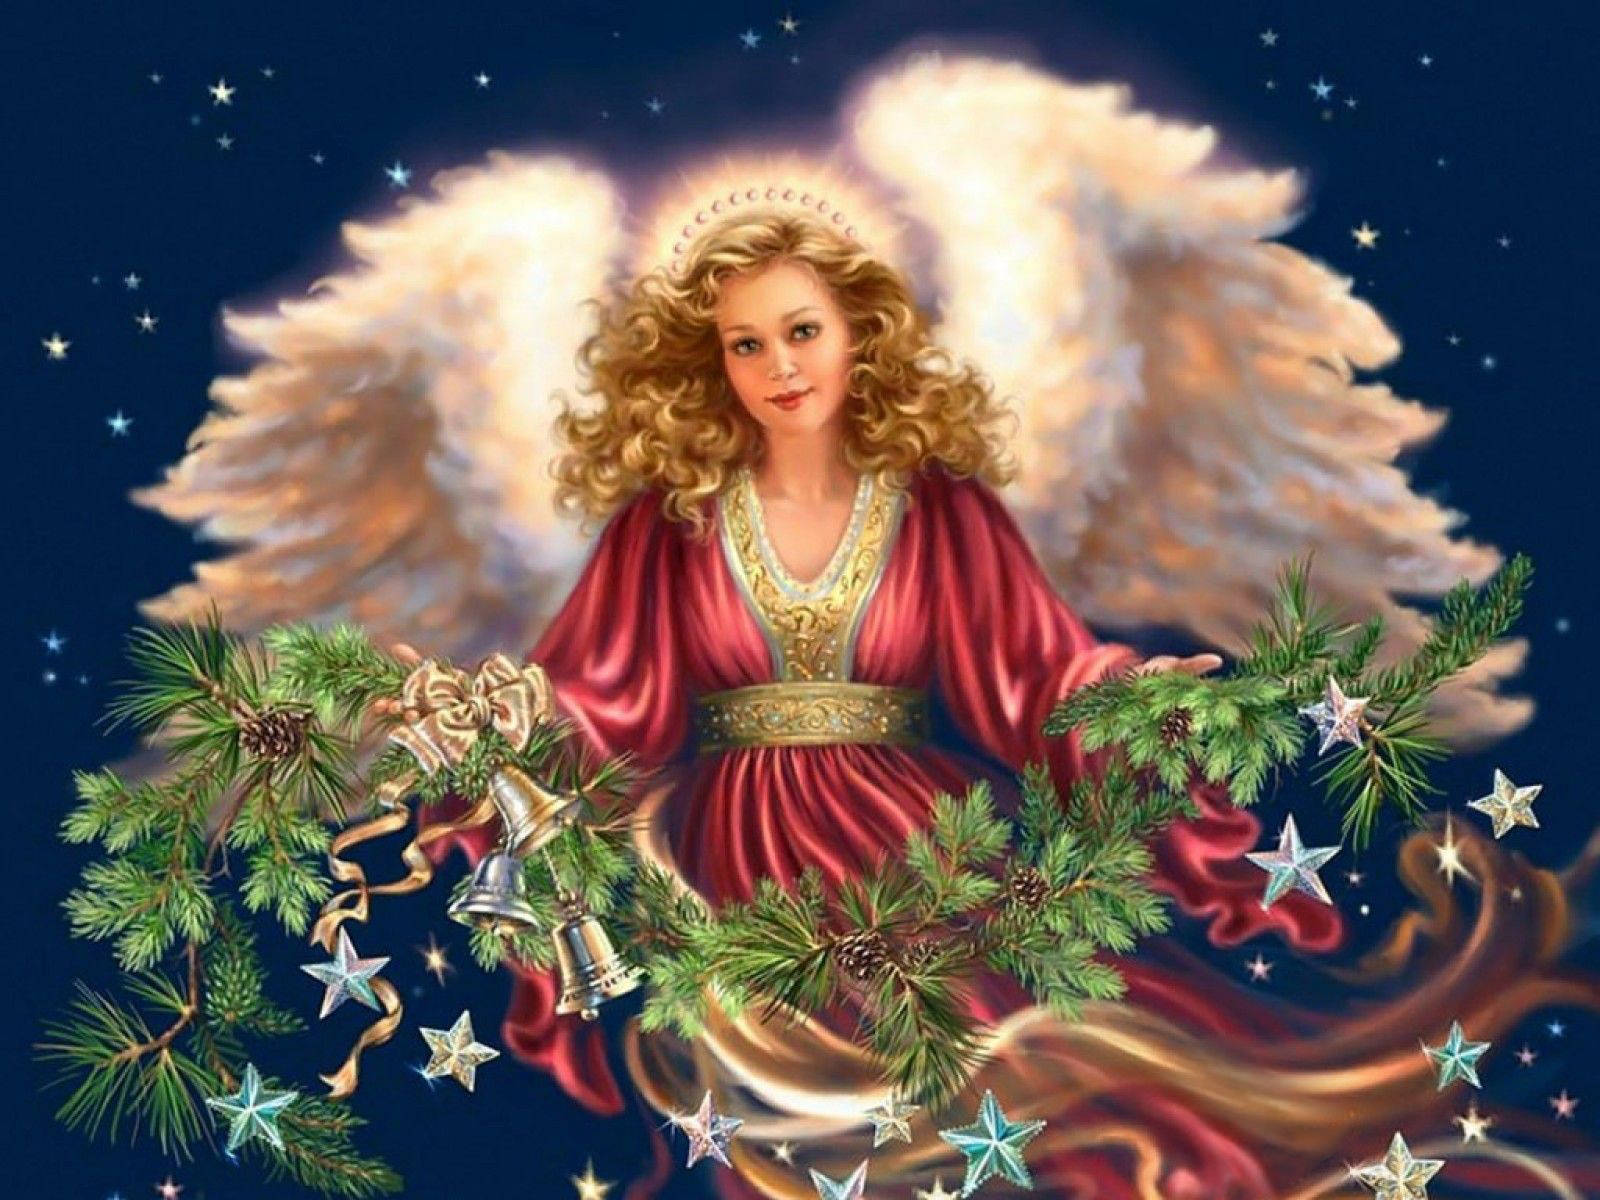 Divine Christmas Angel Wallpaper